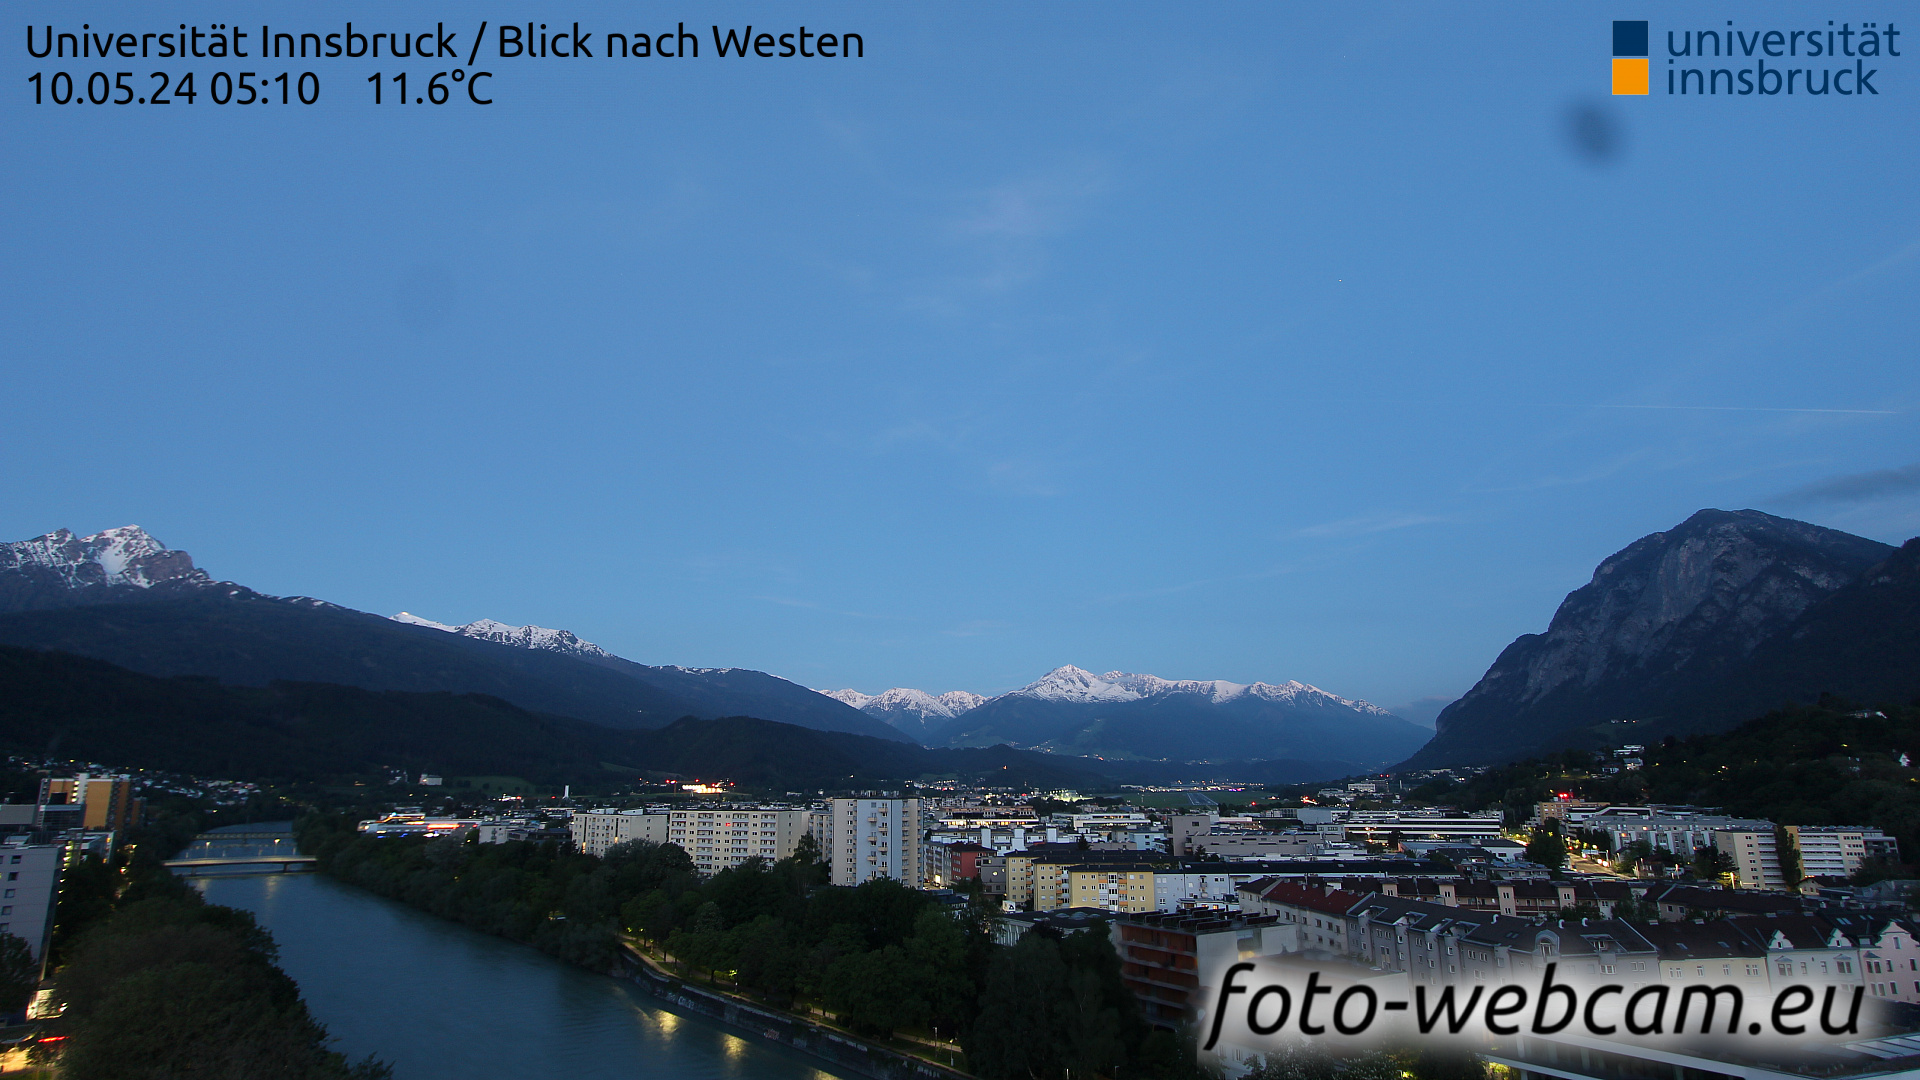 Innsbruck Gio. 05:17